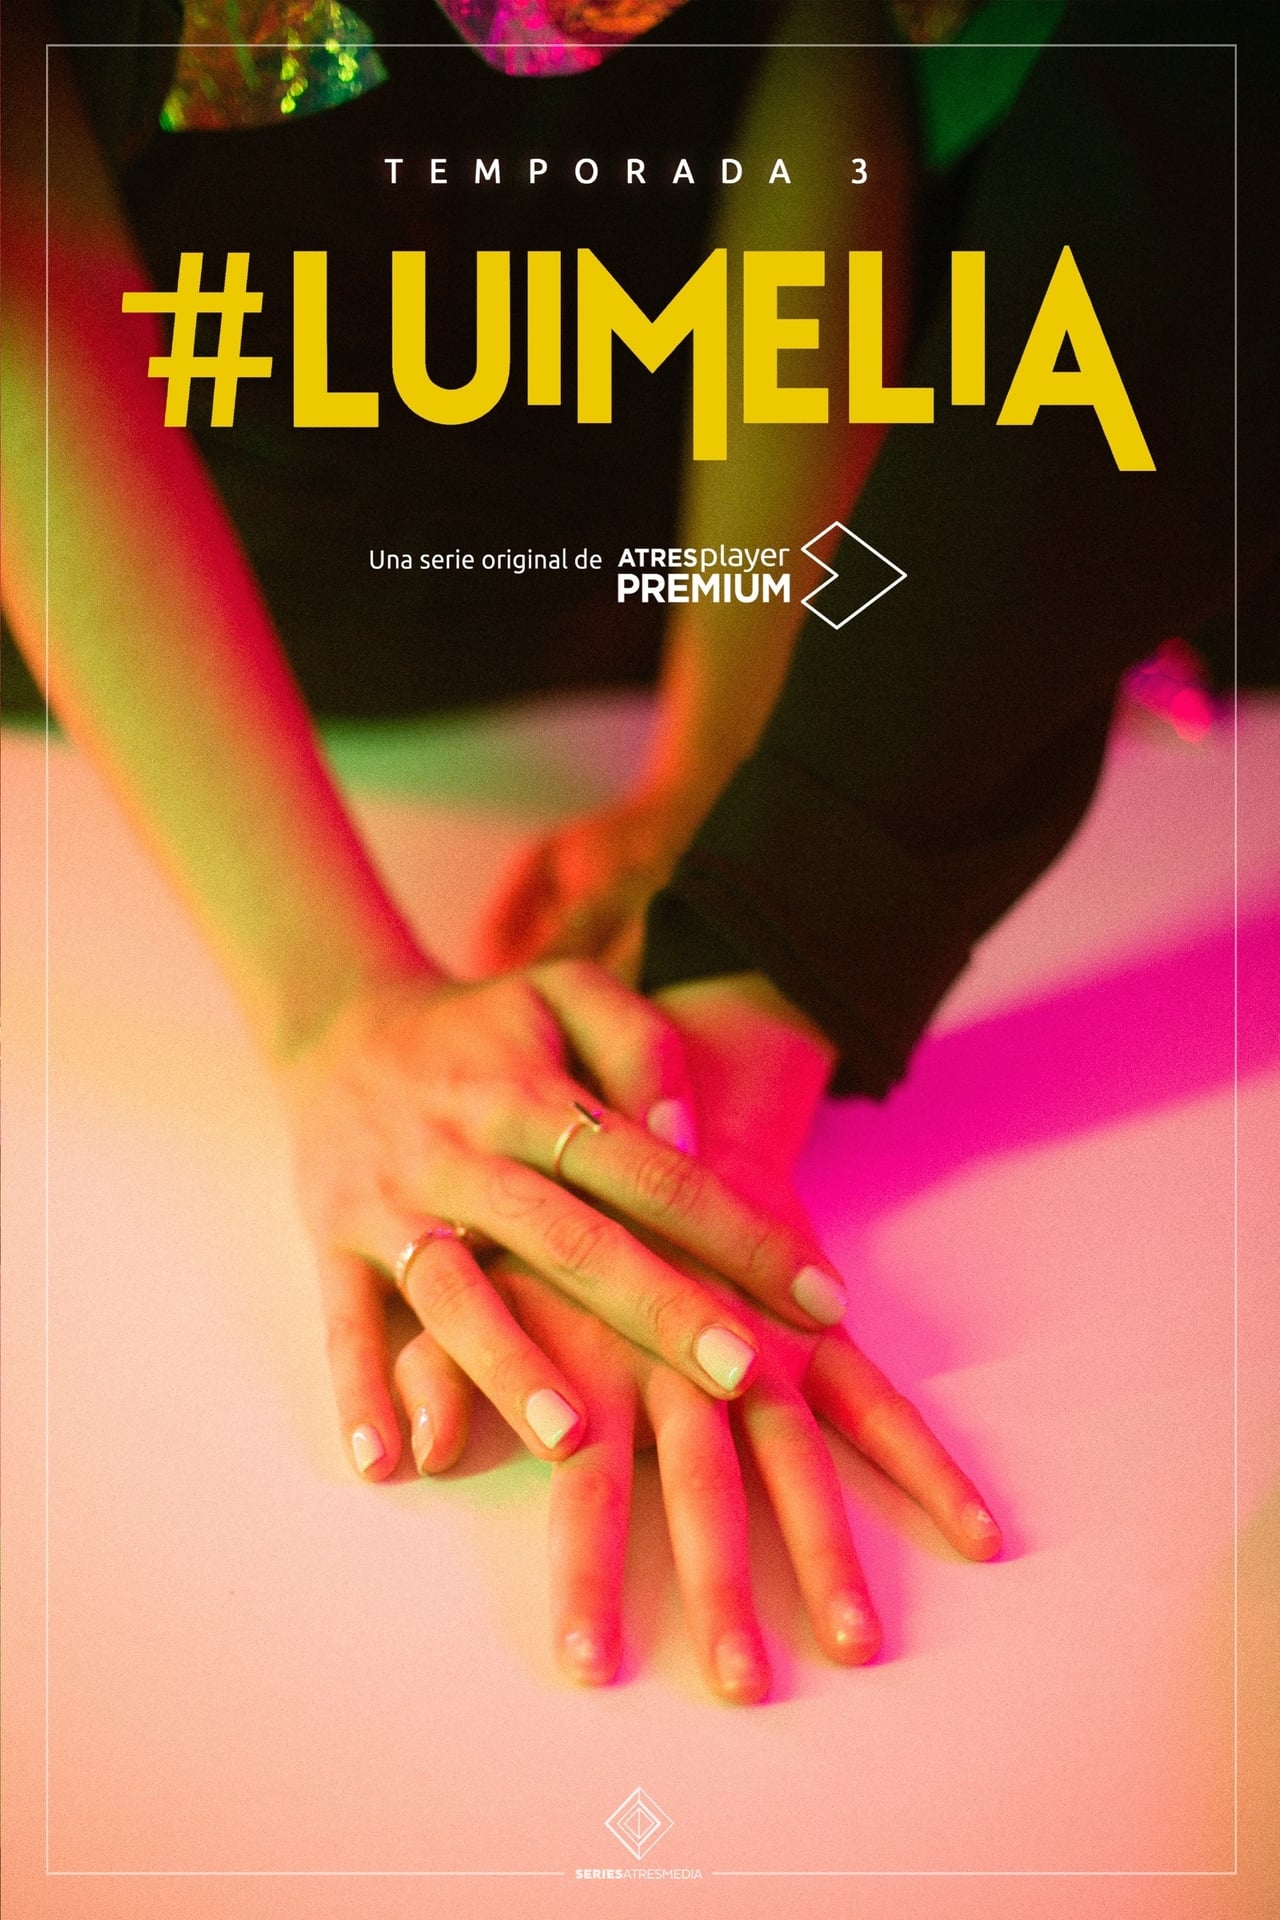 #Luimelia: Temporada 3